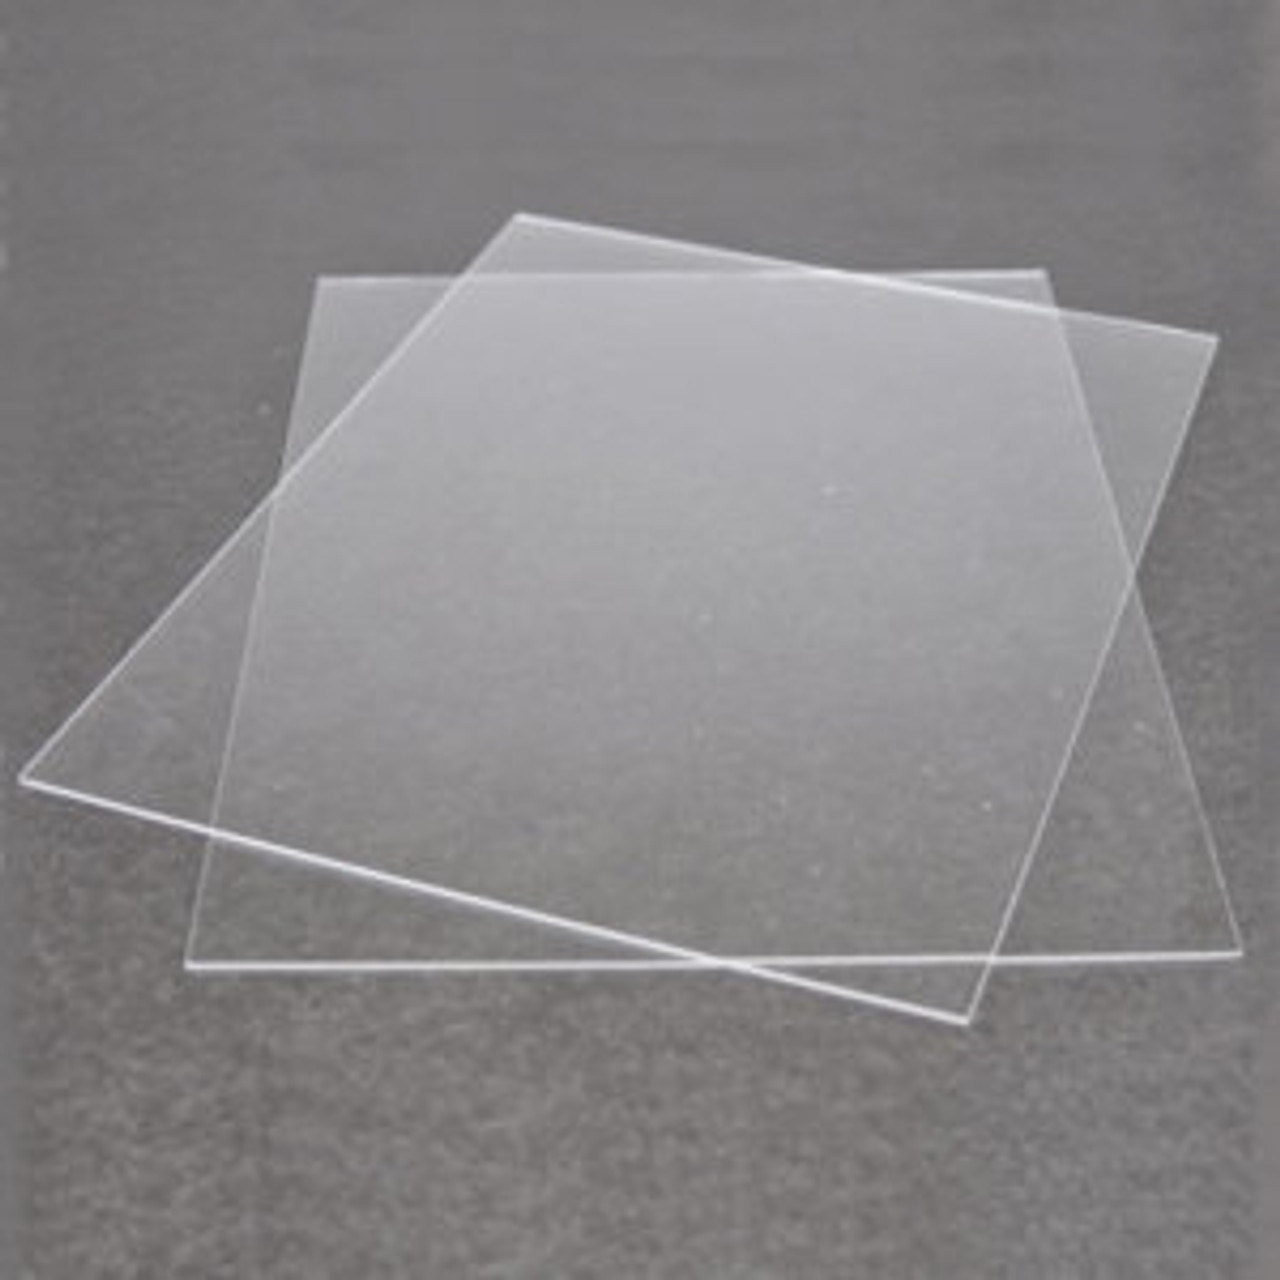 Pattern Plastic Sheets (25 sheets per box)